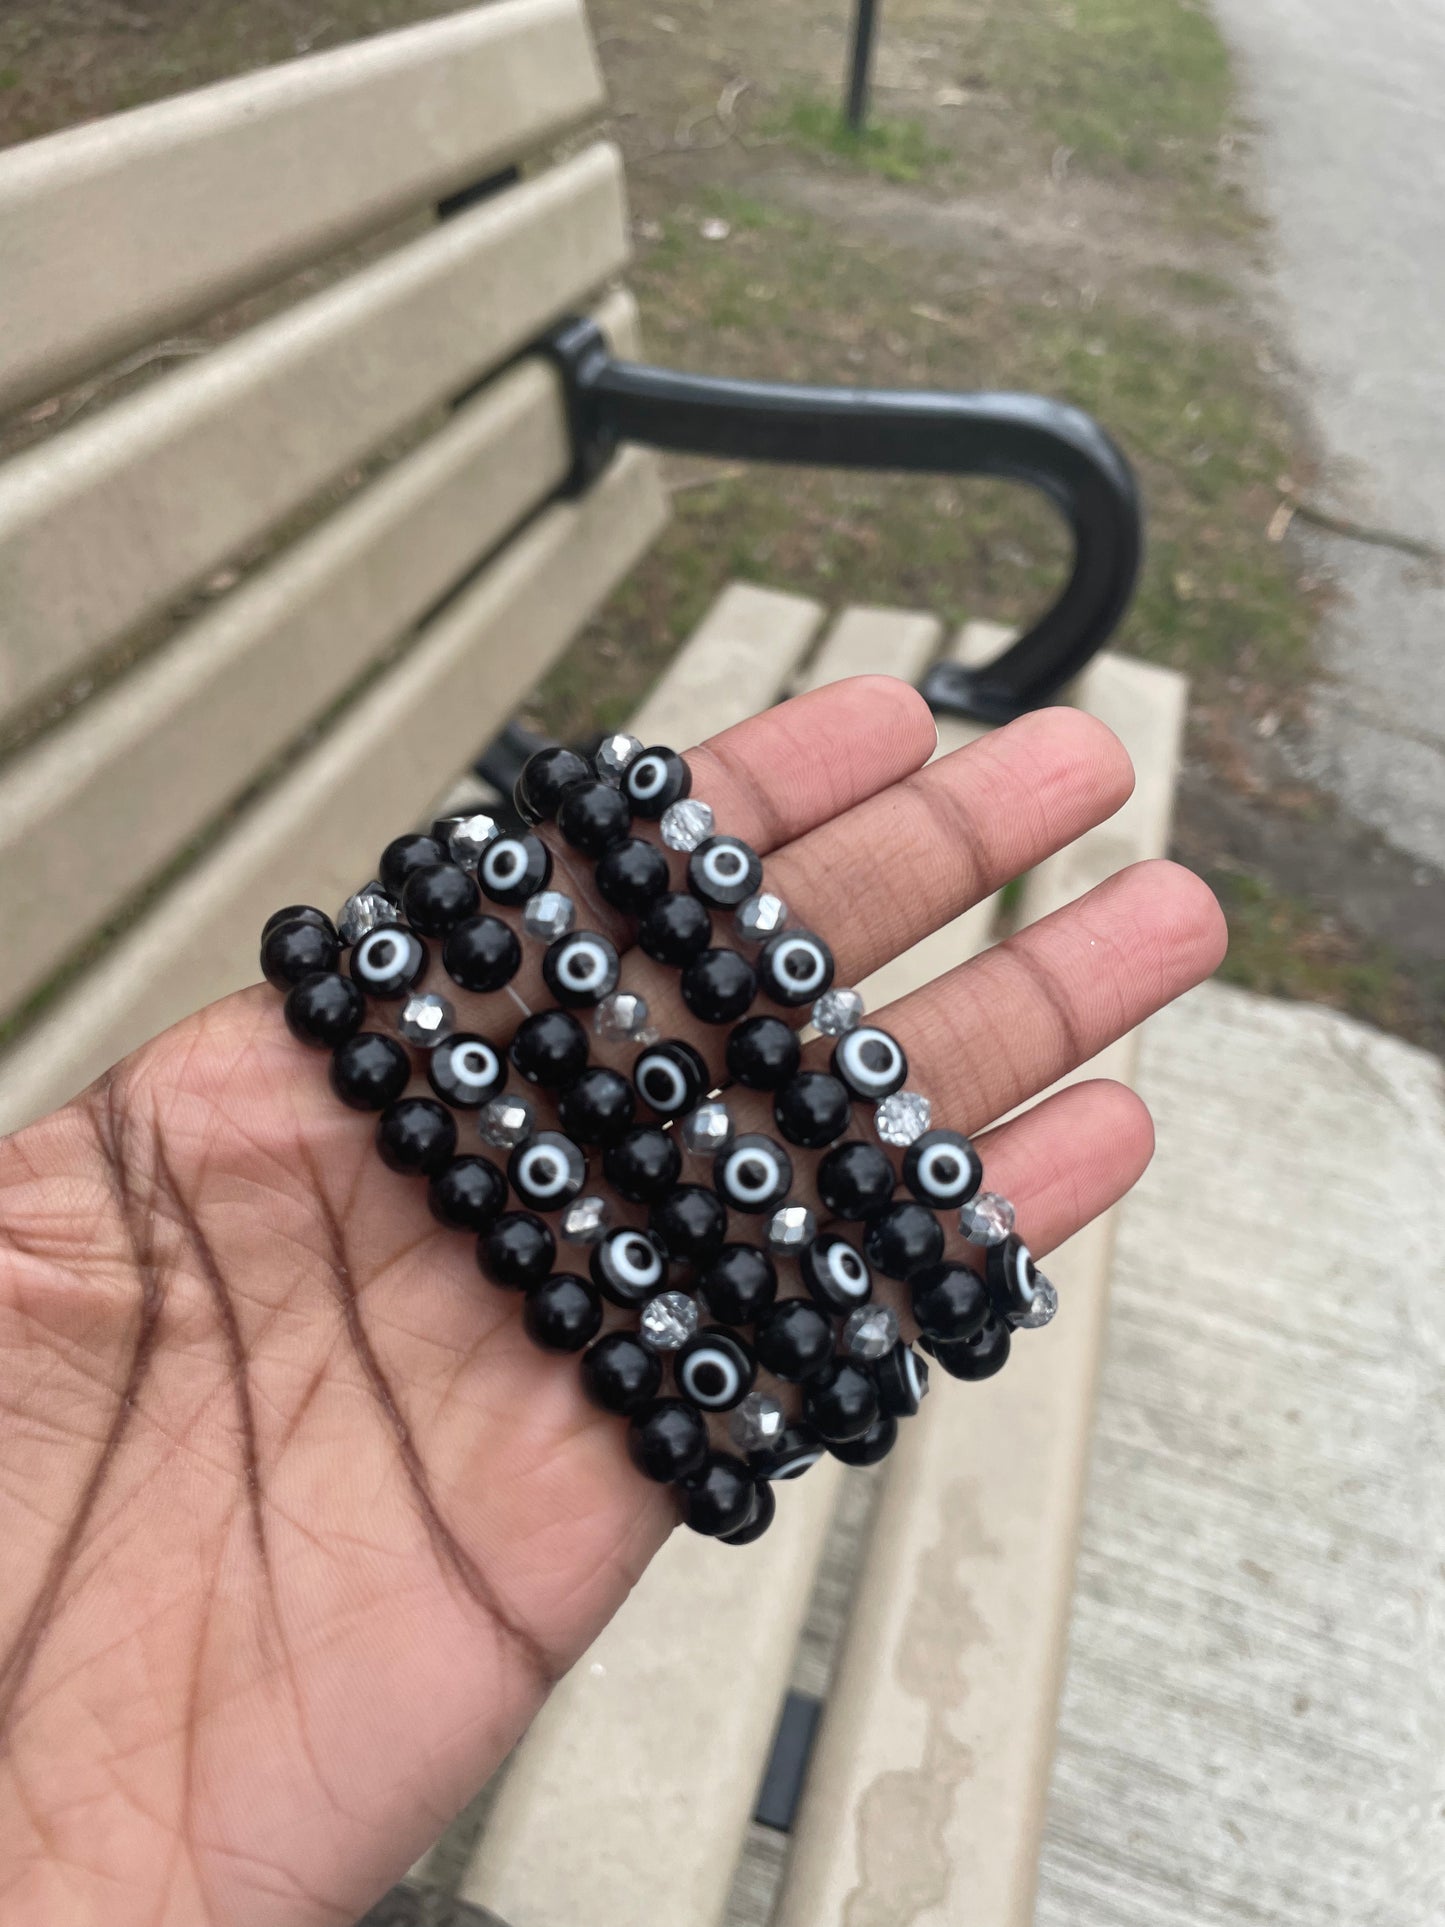 Black Crystal Bracelets